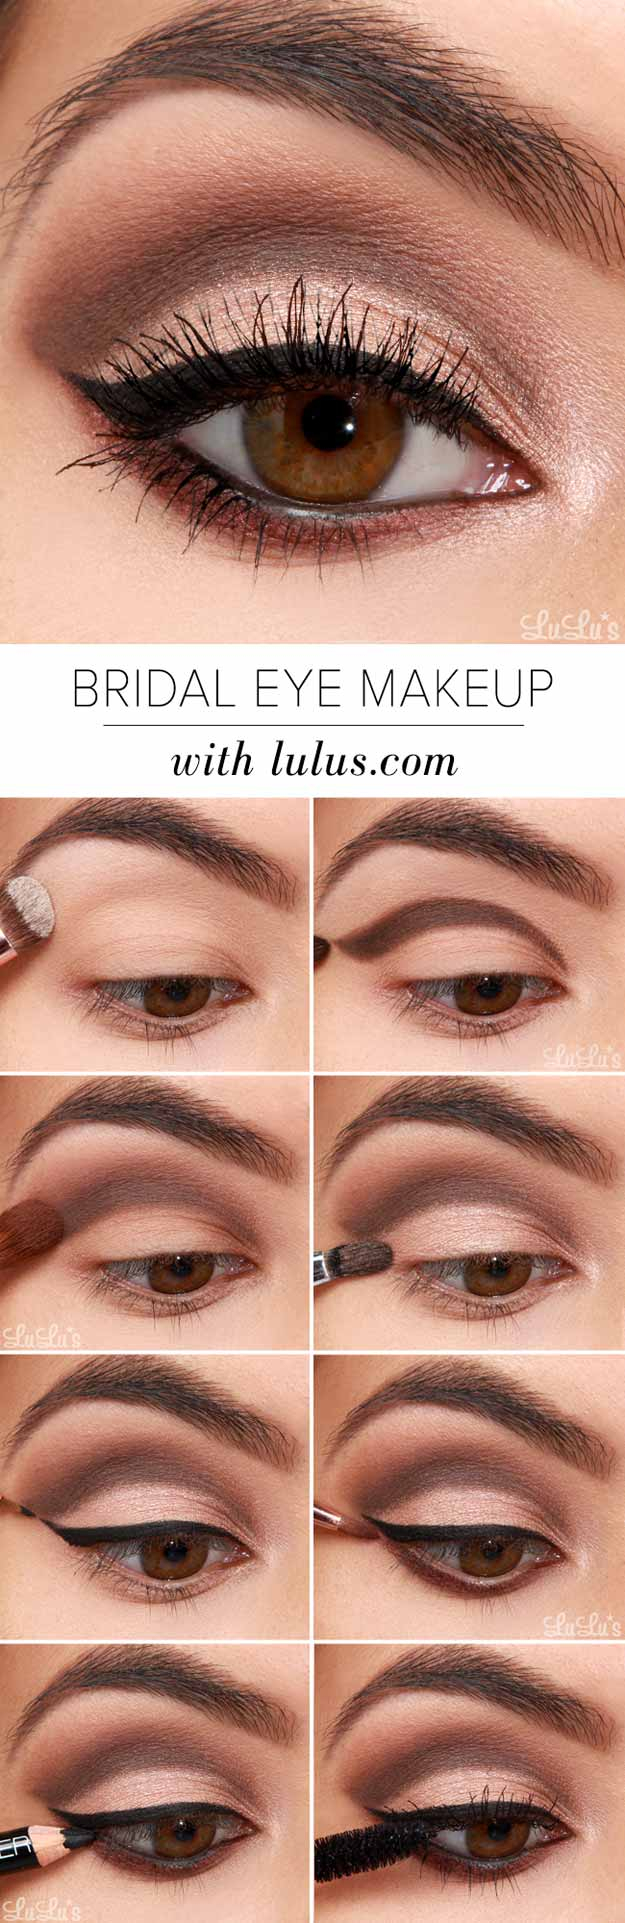 Makeup Ideas For Dark Brown Eyes 30 Wedding Makeup For Brown Eyes The Goddess